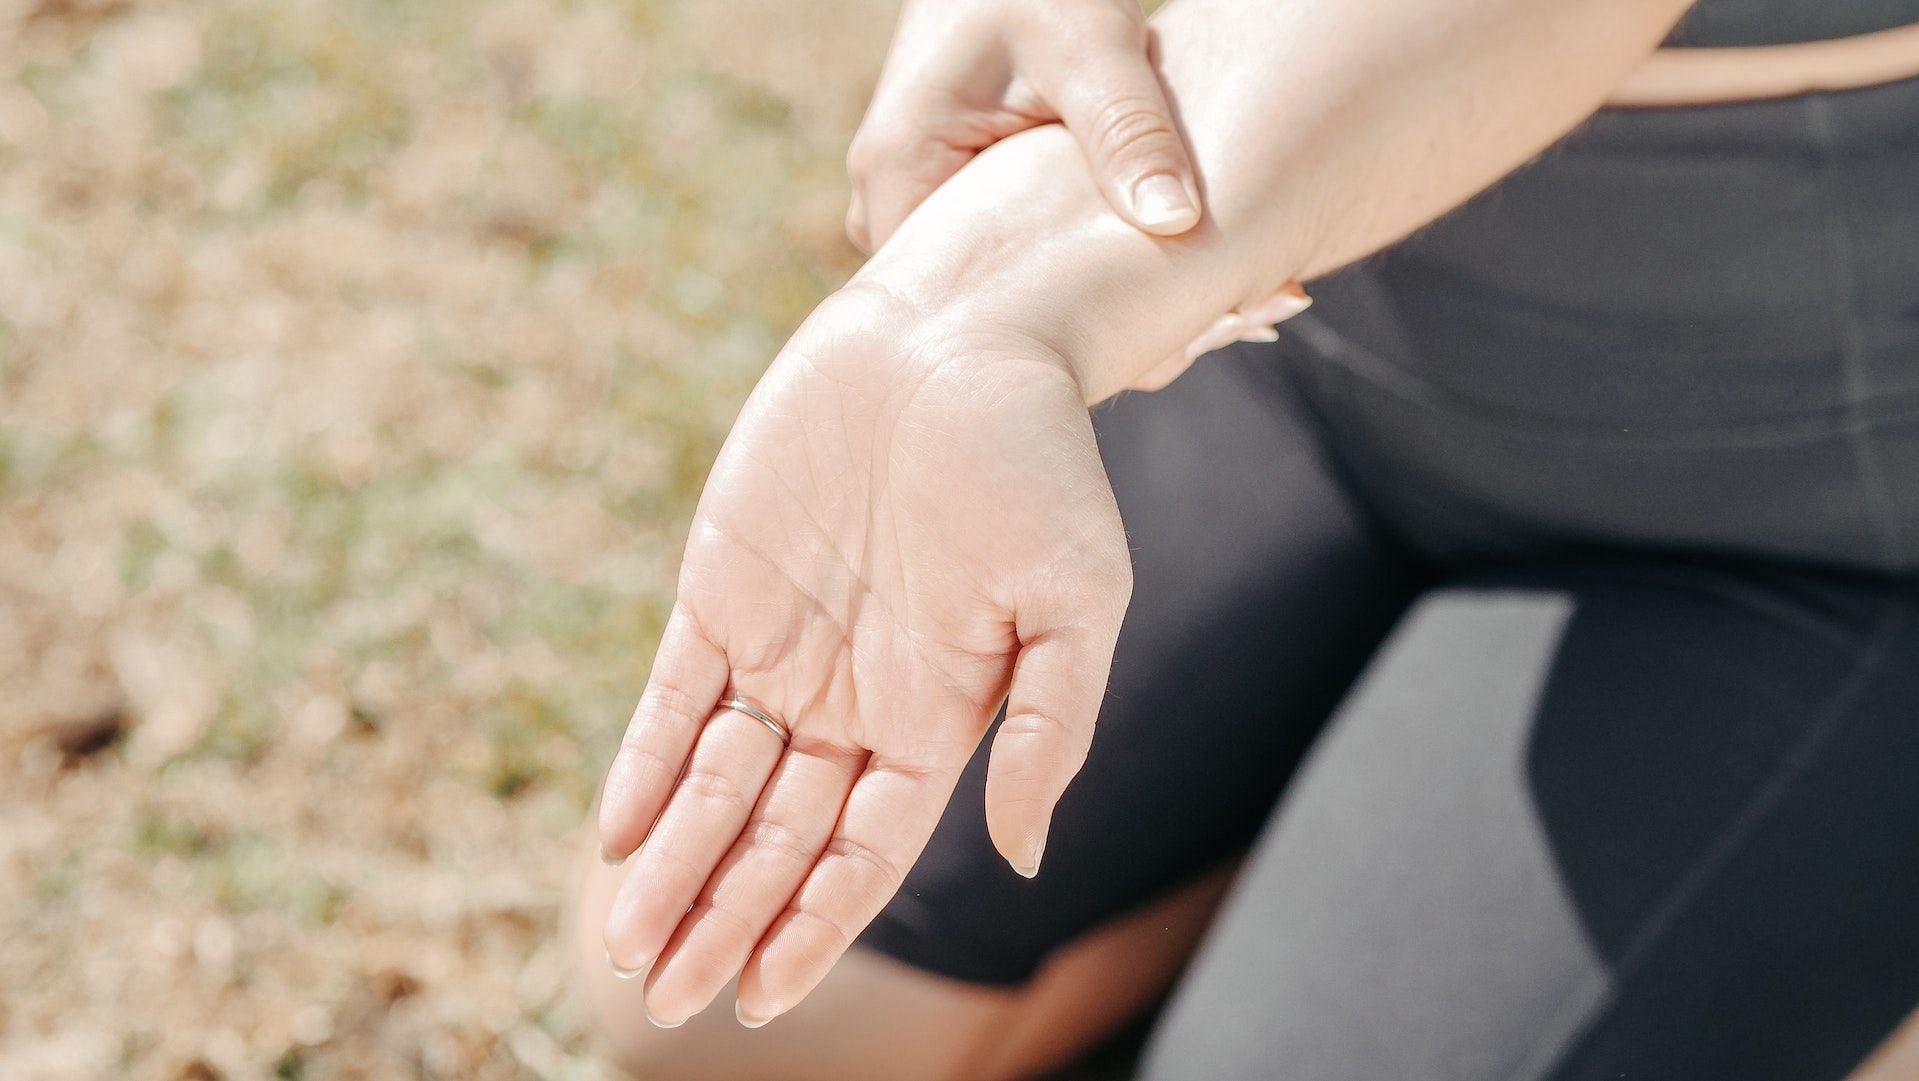 Wrist extension alleviates carpal tunnel syndrome pain. (Photo via Pexels/Kindel Media)